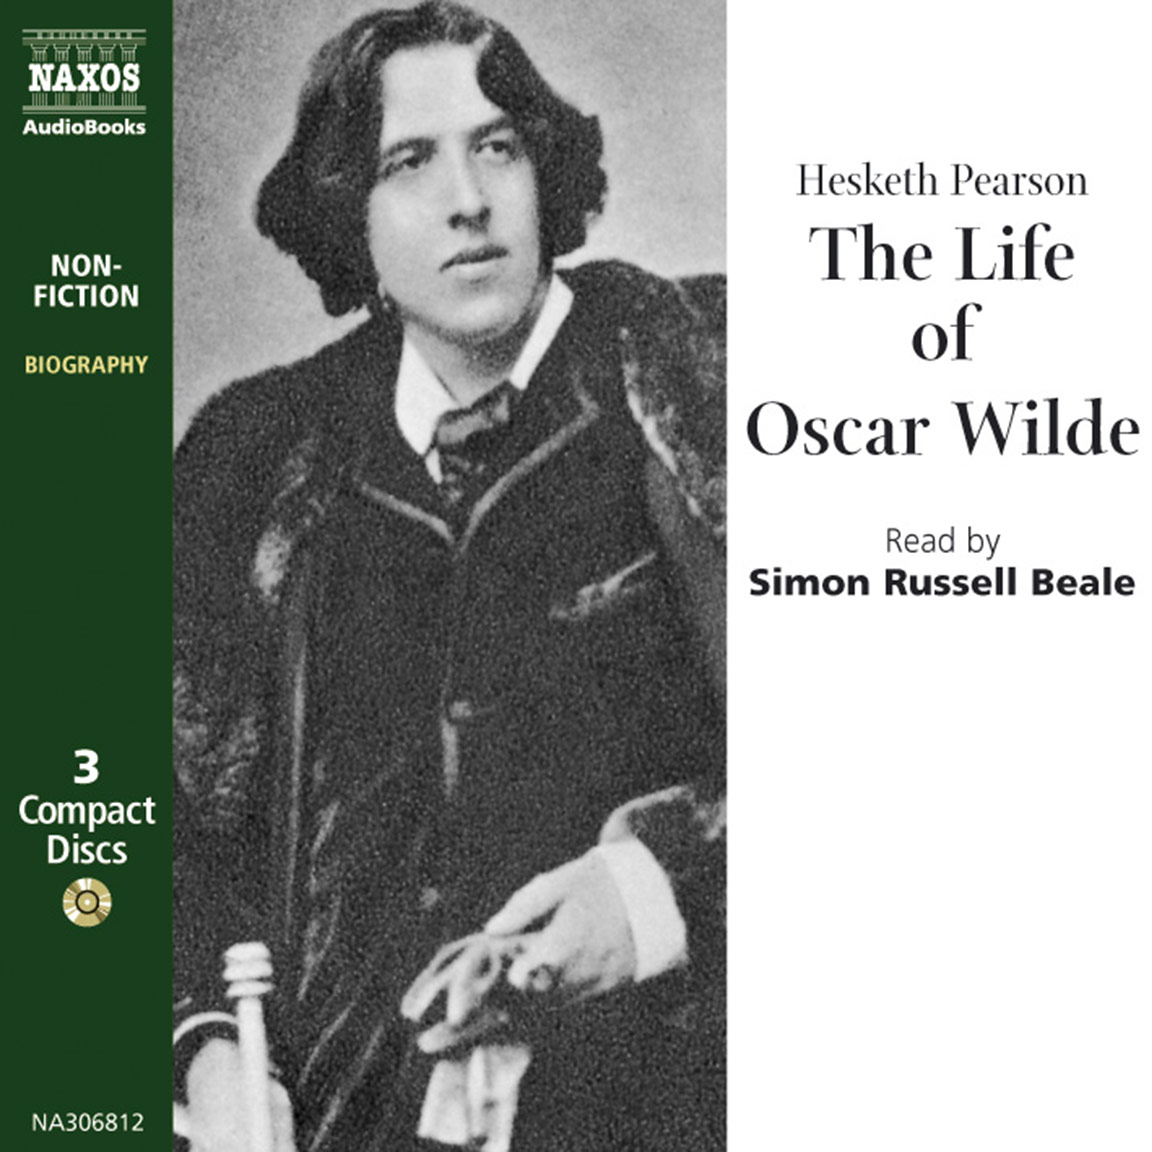 Life of Oscar Wilde